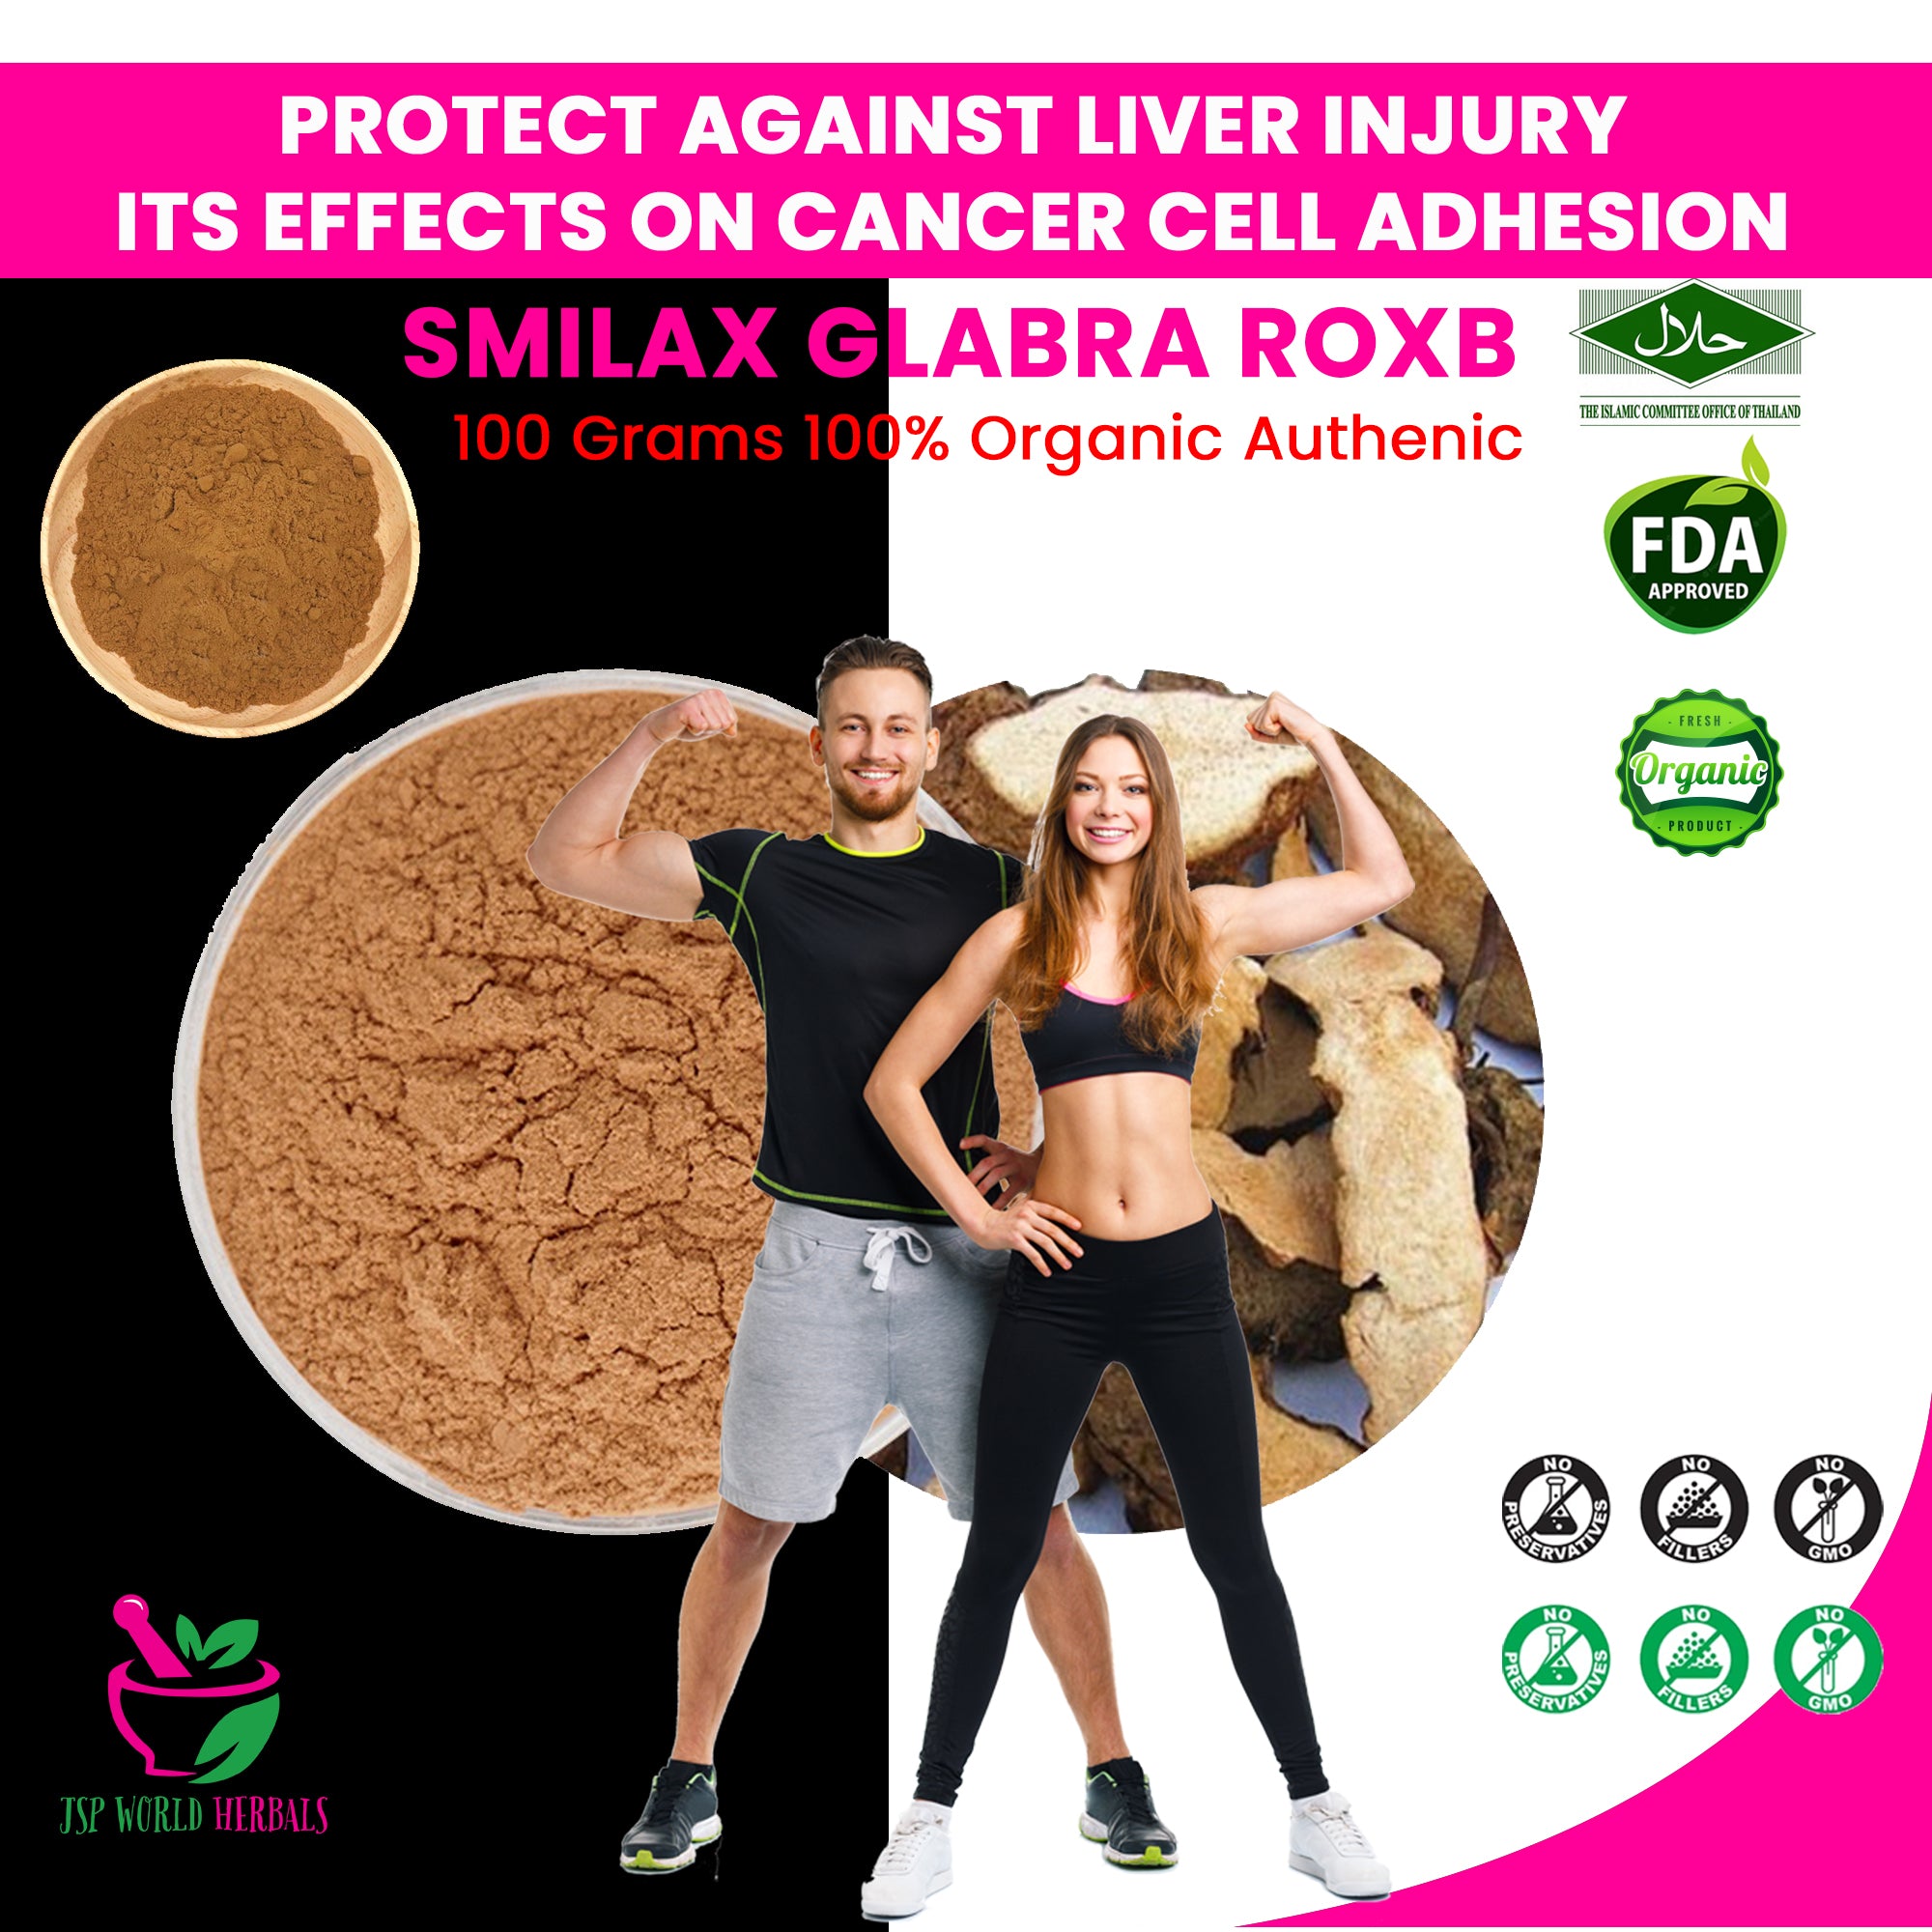 Smilax glabra Roxb Powder 100 Grams 100% Organic Authenic